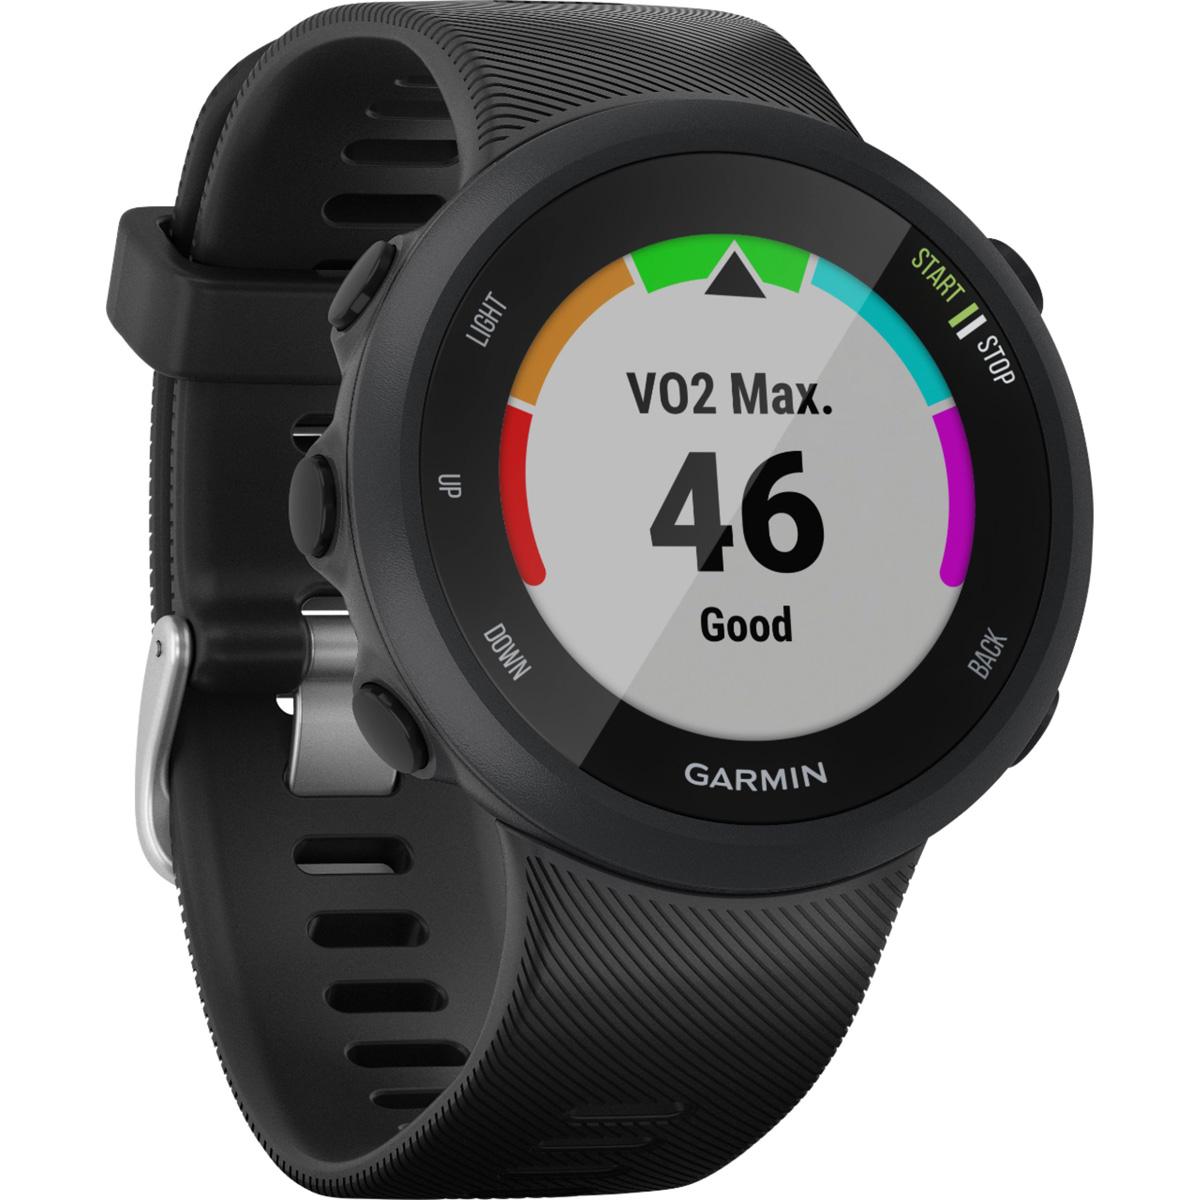 Garmin Forerunner 45 GPS Heart Rate Monitor Running Smartwatch for $149.99 Shipped